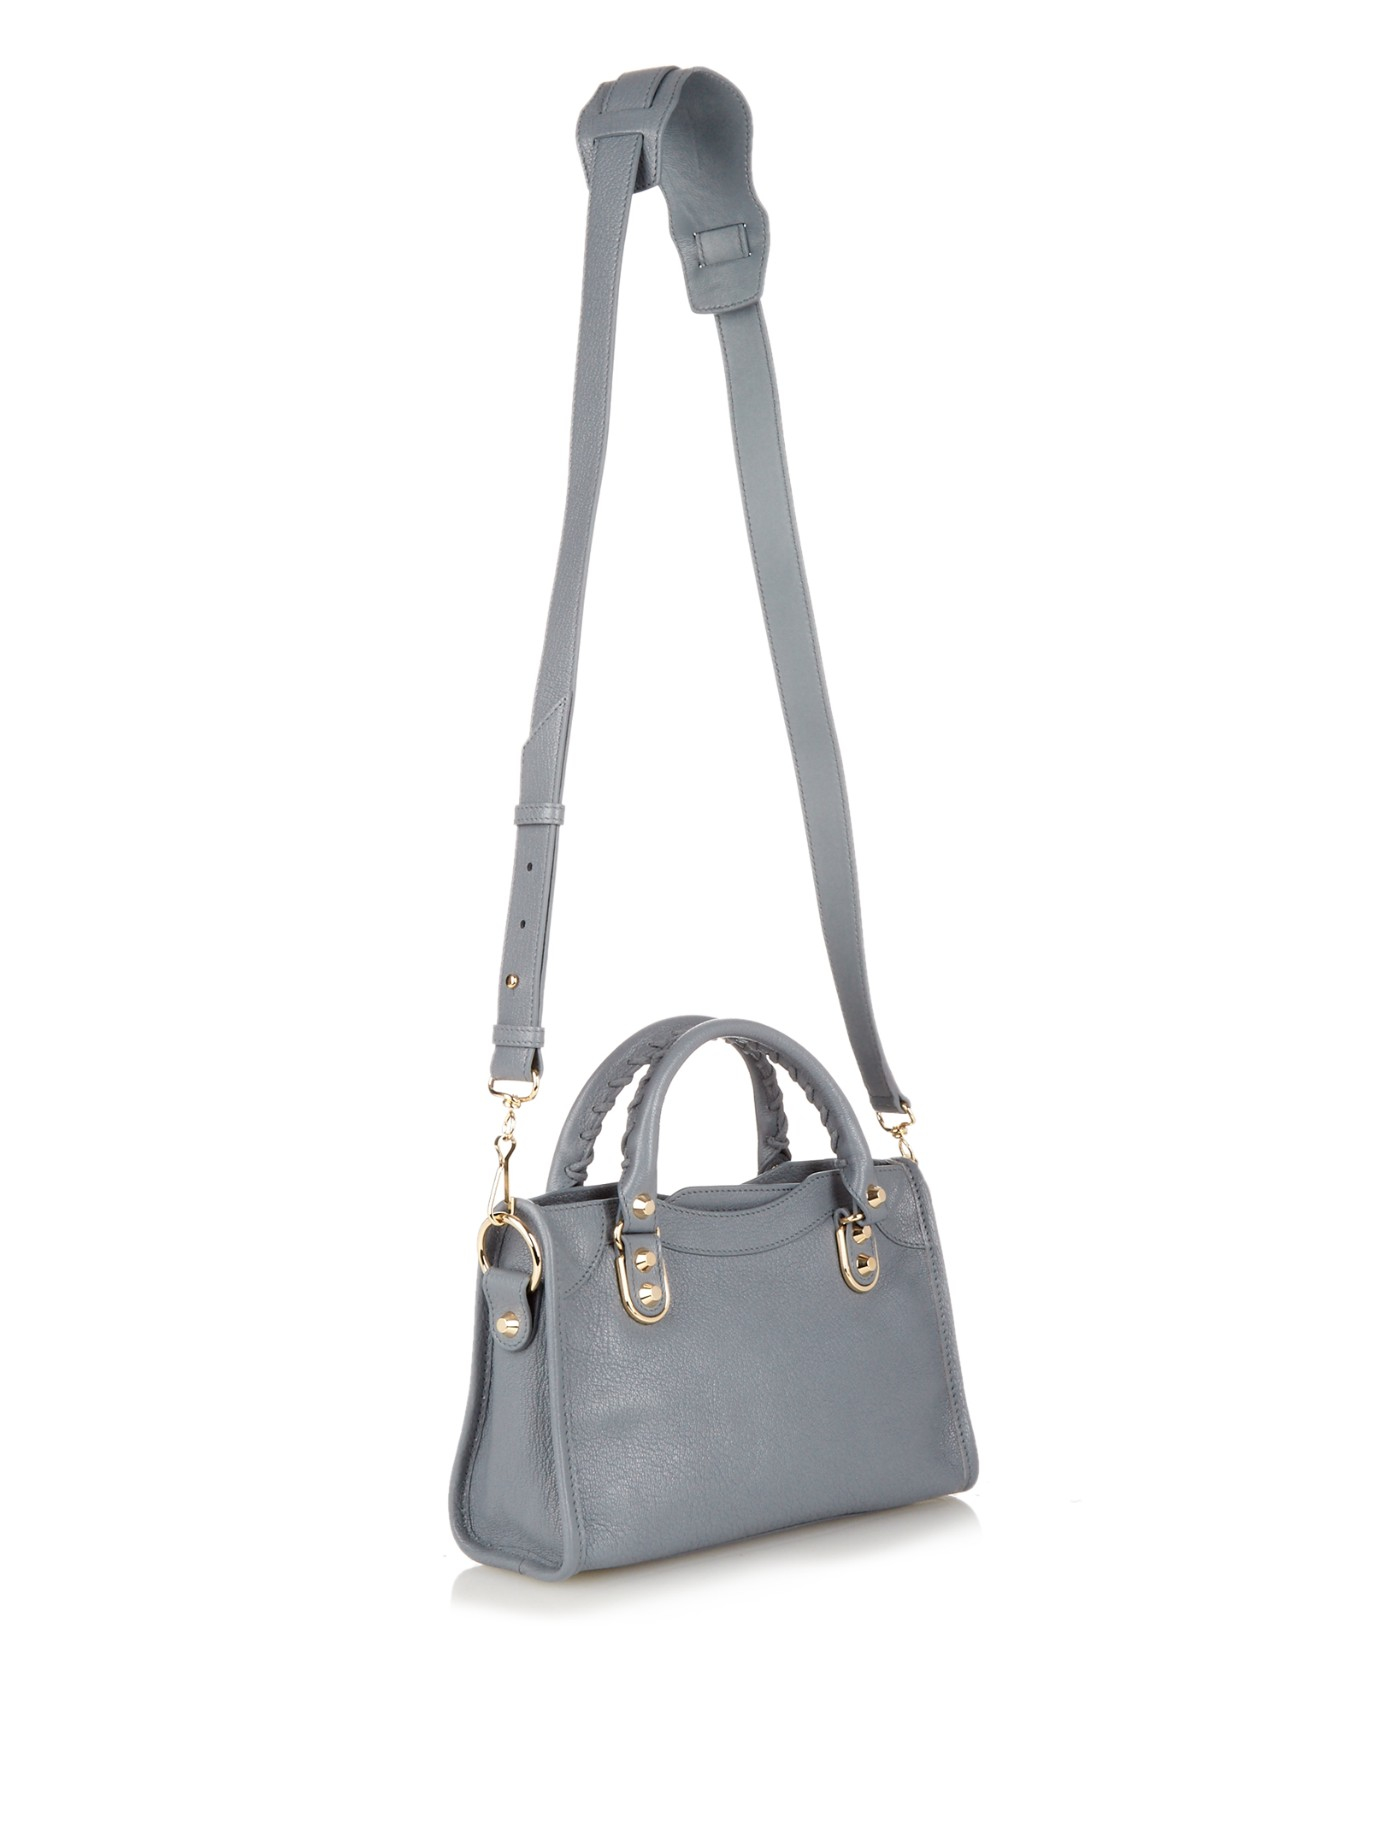 Balenciaga Classic Metallic Edge City Small Leather Shoulder Bag In Blue   ModeSens